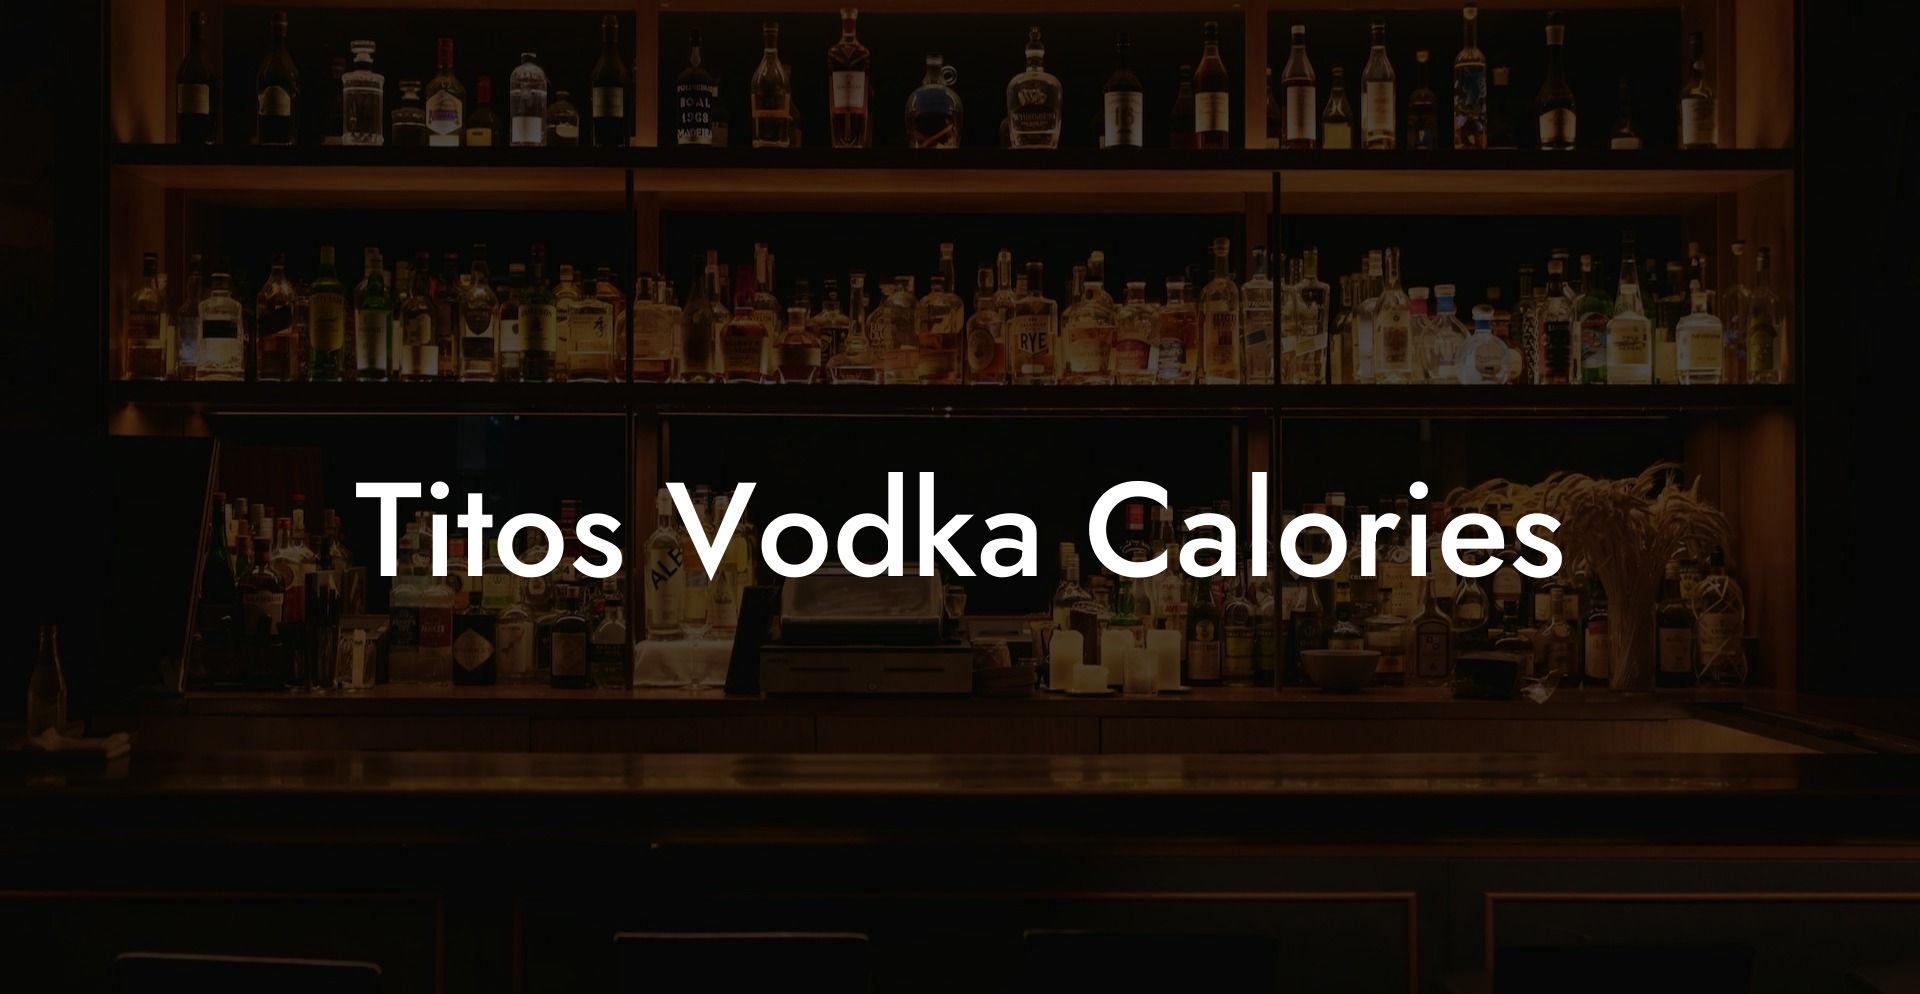 Titos Vodka Calories